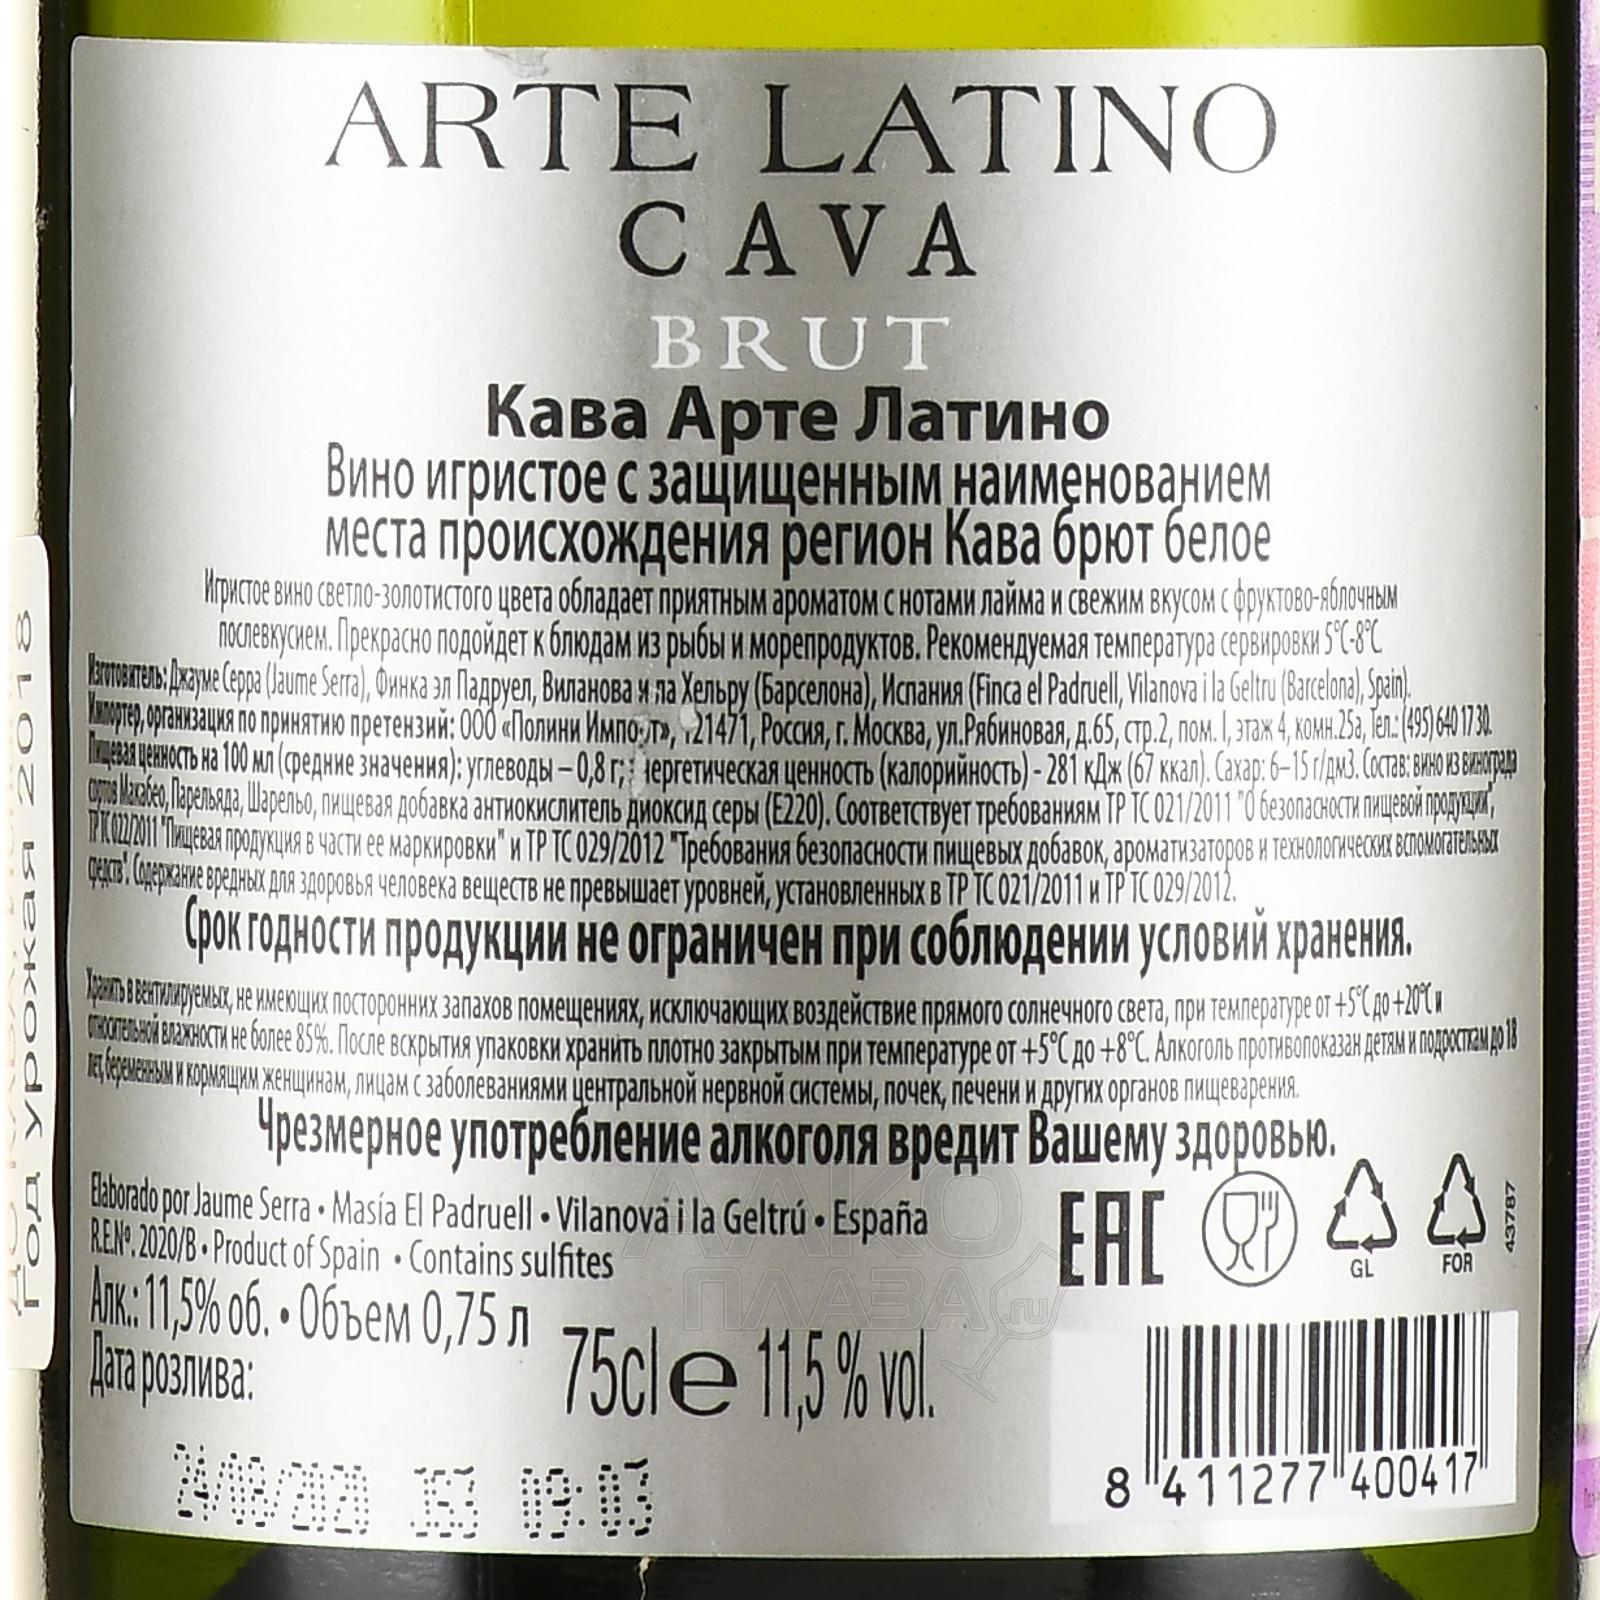 Arte latino brut. Вино игристое кава арте латино. Шампанское Brut Arte Latino.